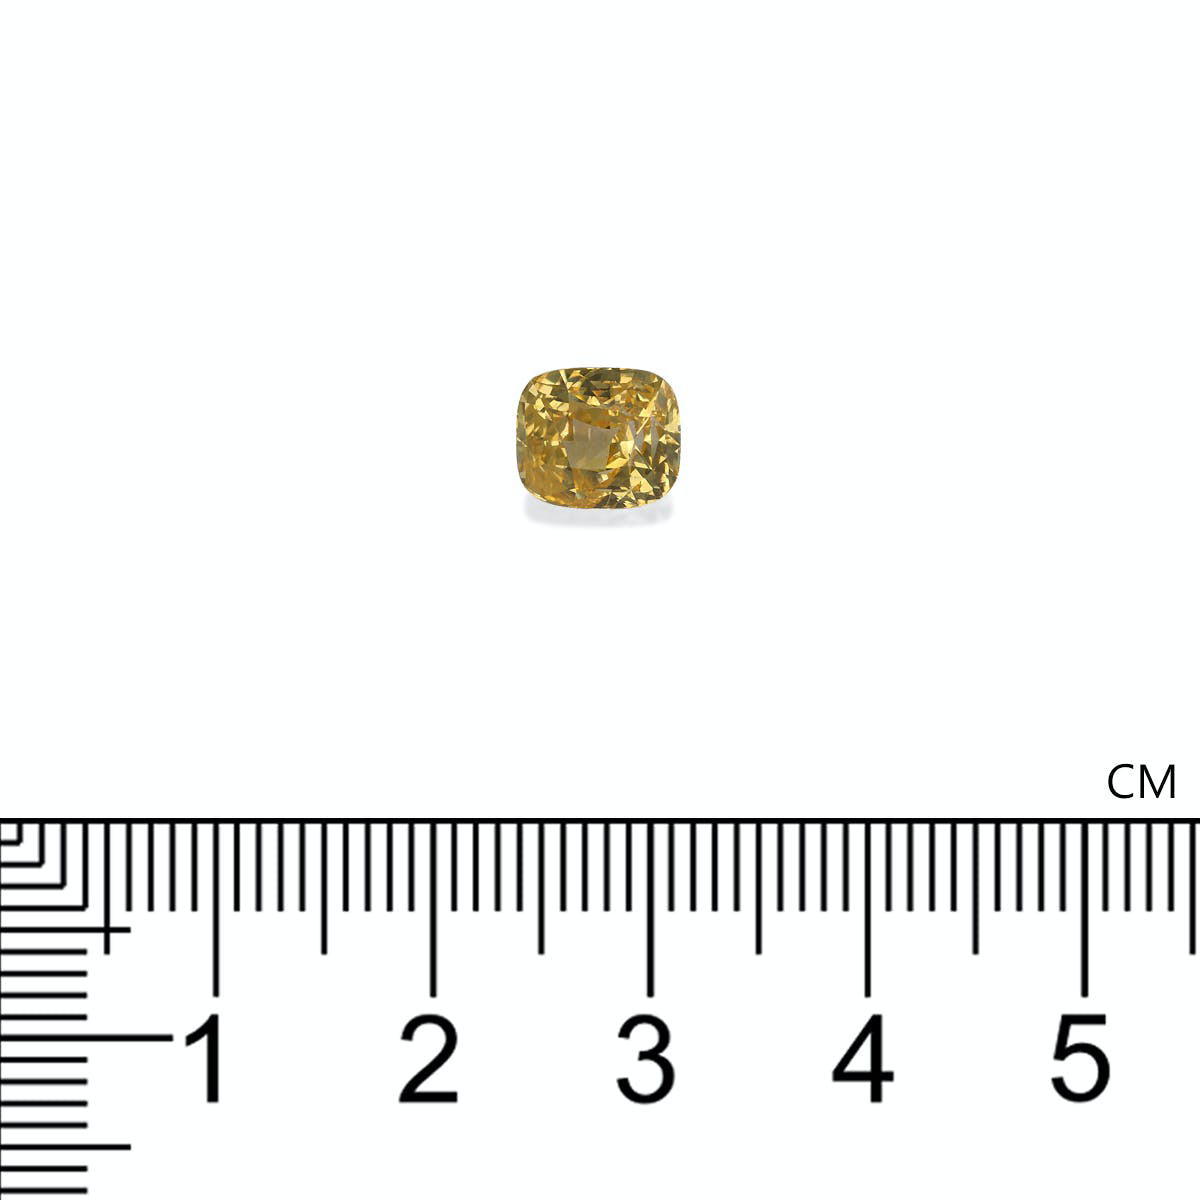 Picture of Yellow Sapphire Unheated Sri Lanka 3.04ct (YS0006)